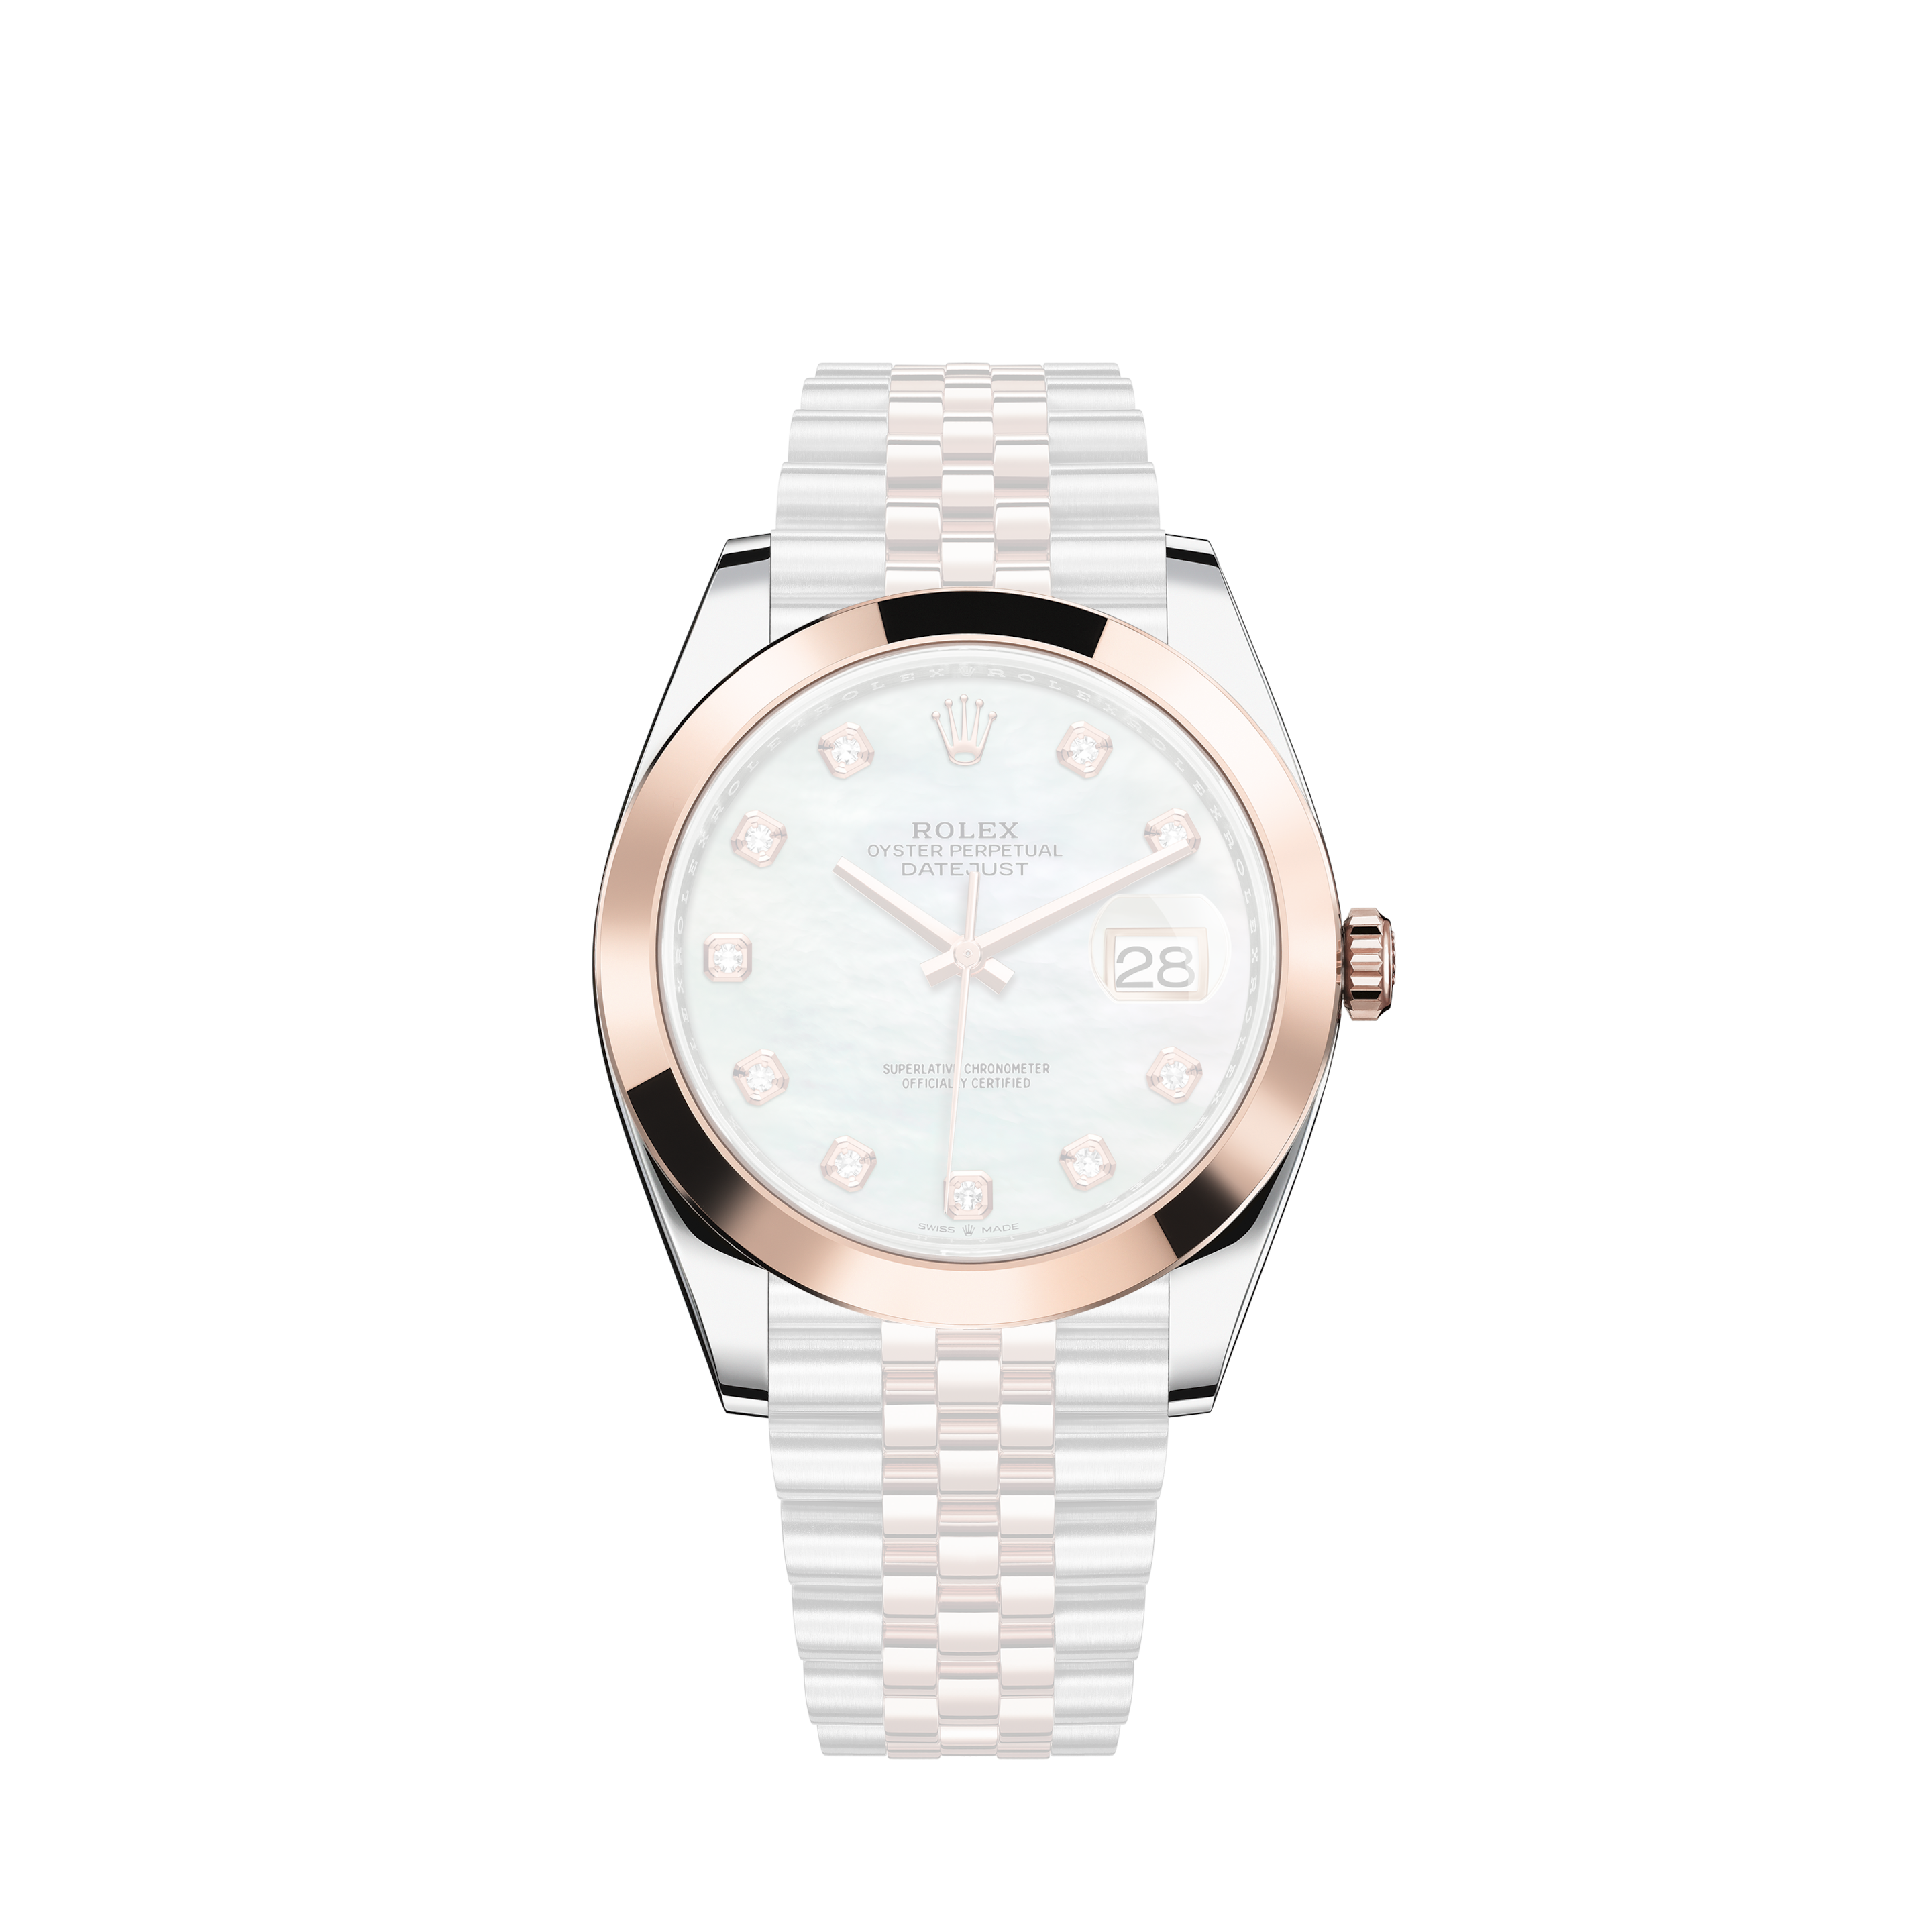 Rolex Oyster Perpetual Datejust Diamond Bezel & Shoulders Blue Roman Numeral Dial 36mm Watch